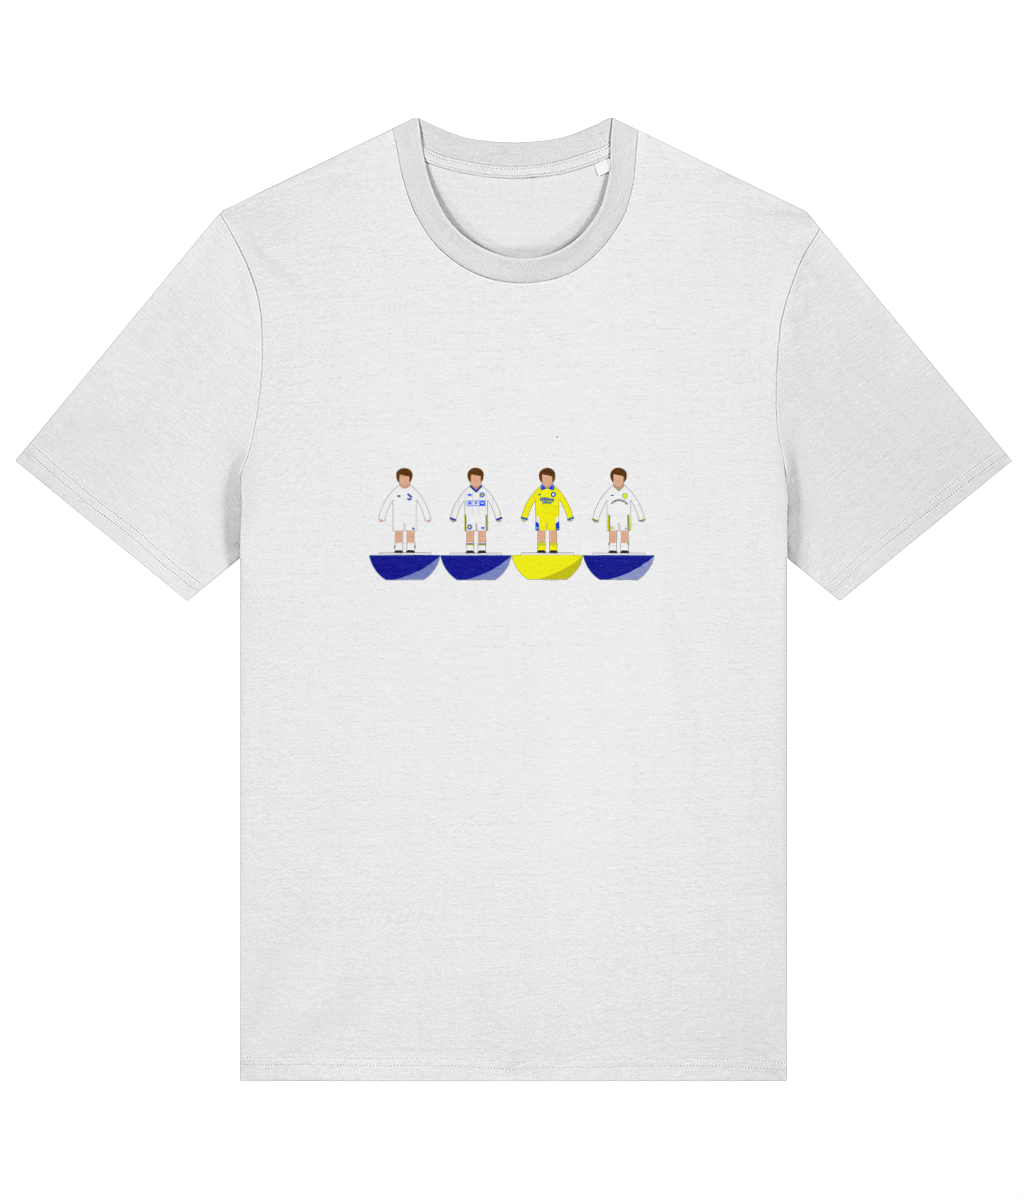 Football Kits 'Leeds combined' Unisex T-Shirt